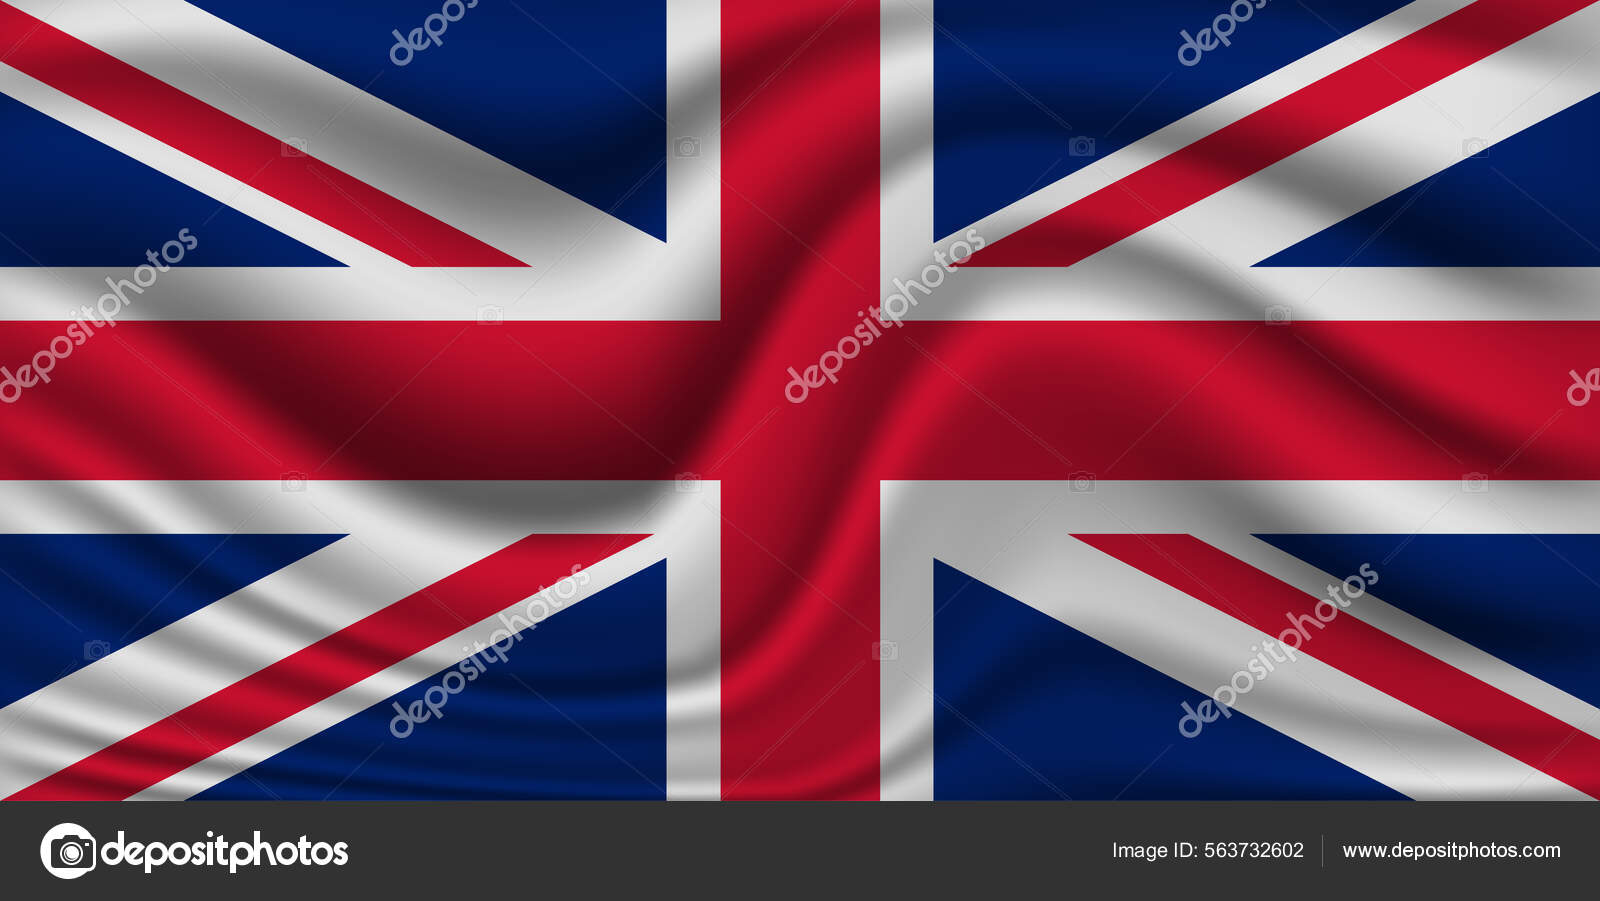 Bandeira Union Jack England United Kingdom Flag Vector Illustration  Bandeira imagem vetorial de sky.cublue© 563732602